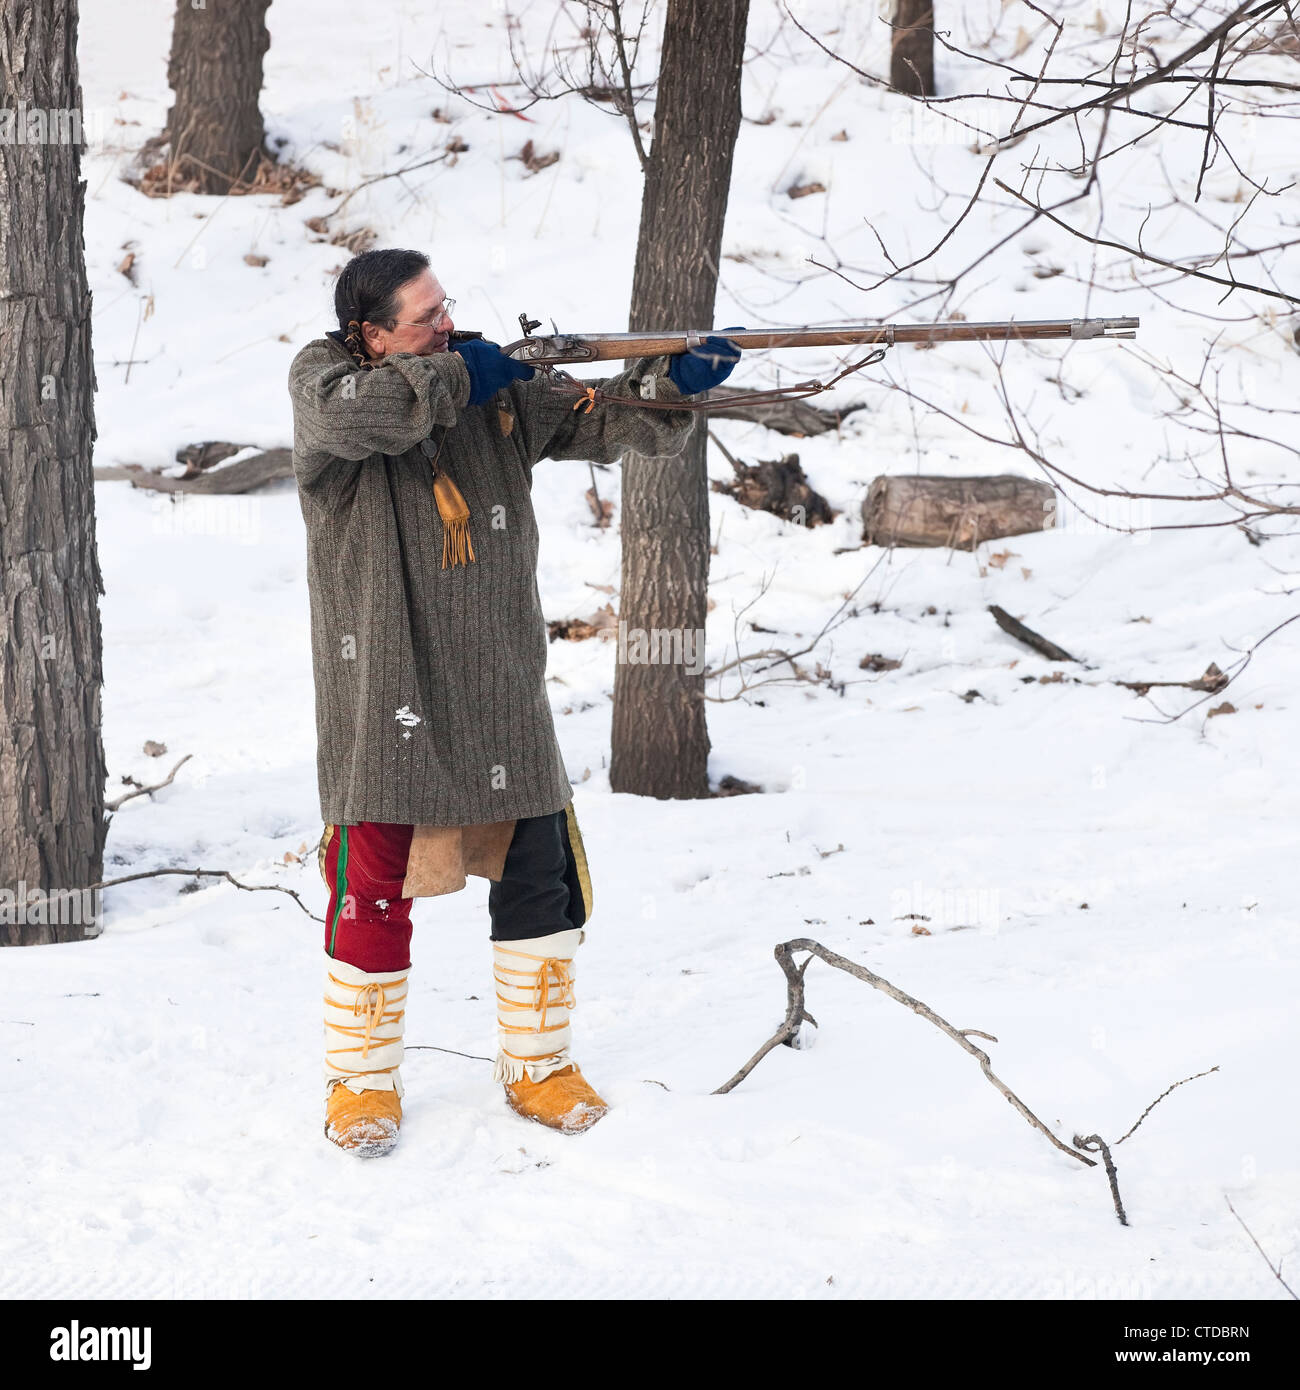 Metis in traditional costume shooting flintlock musket at Festival du Voyageur, Winnipeg, Manitoba, Canada Stock Photo